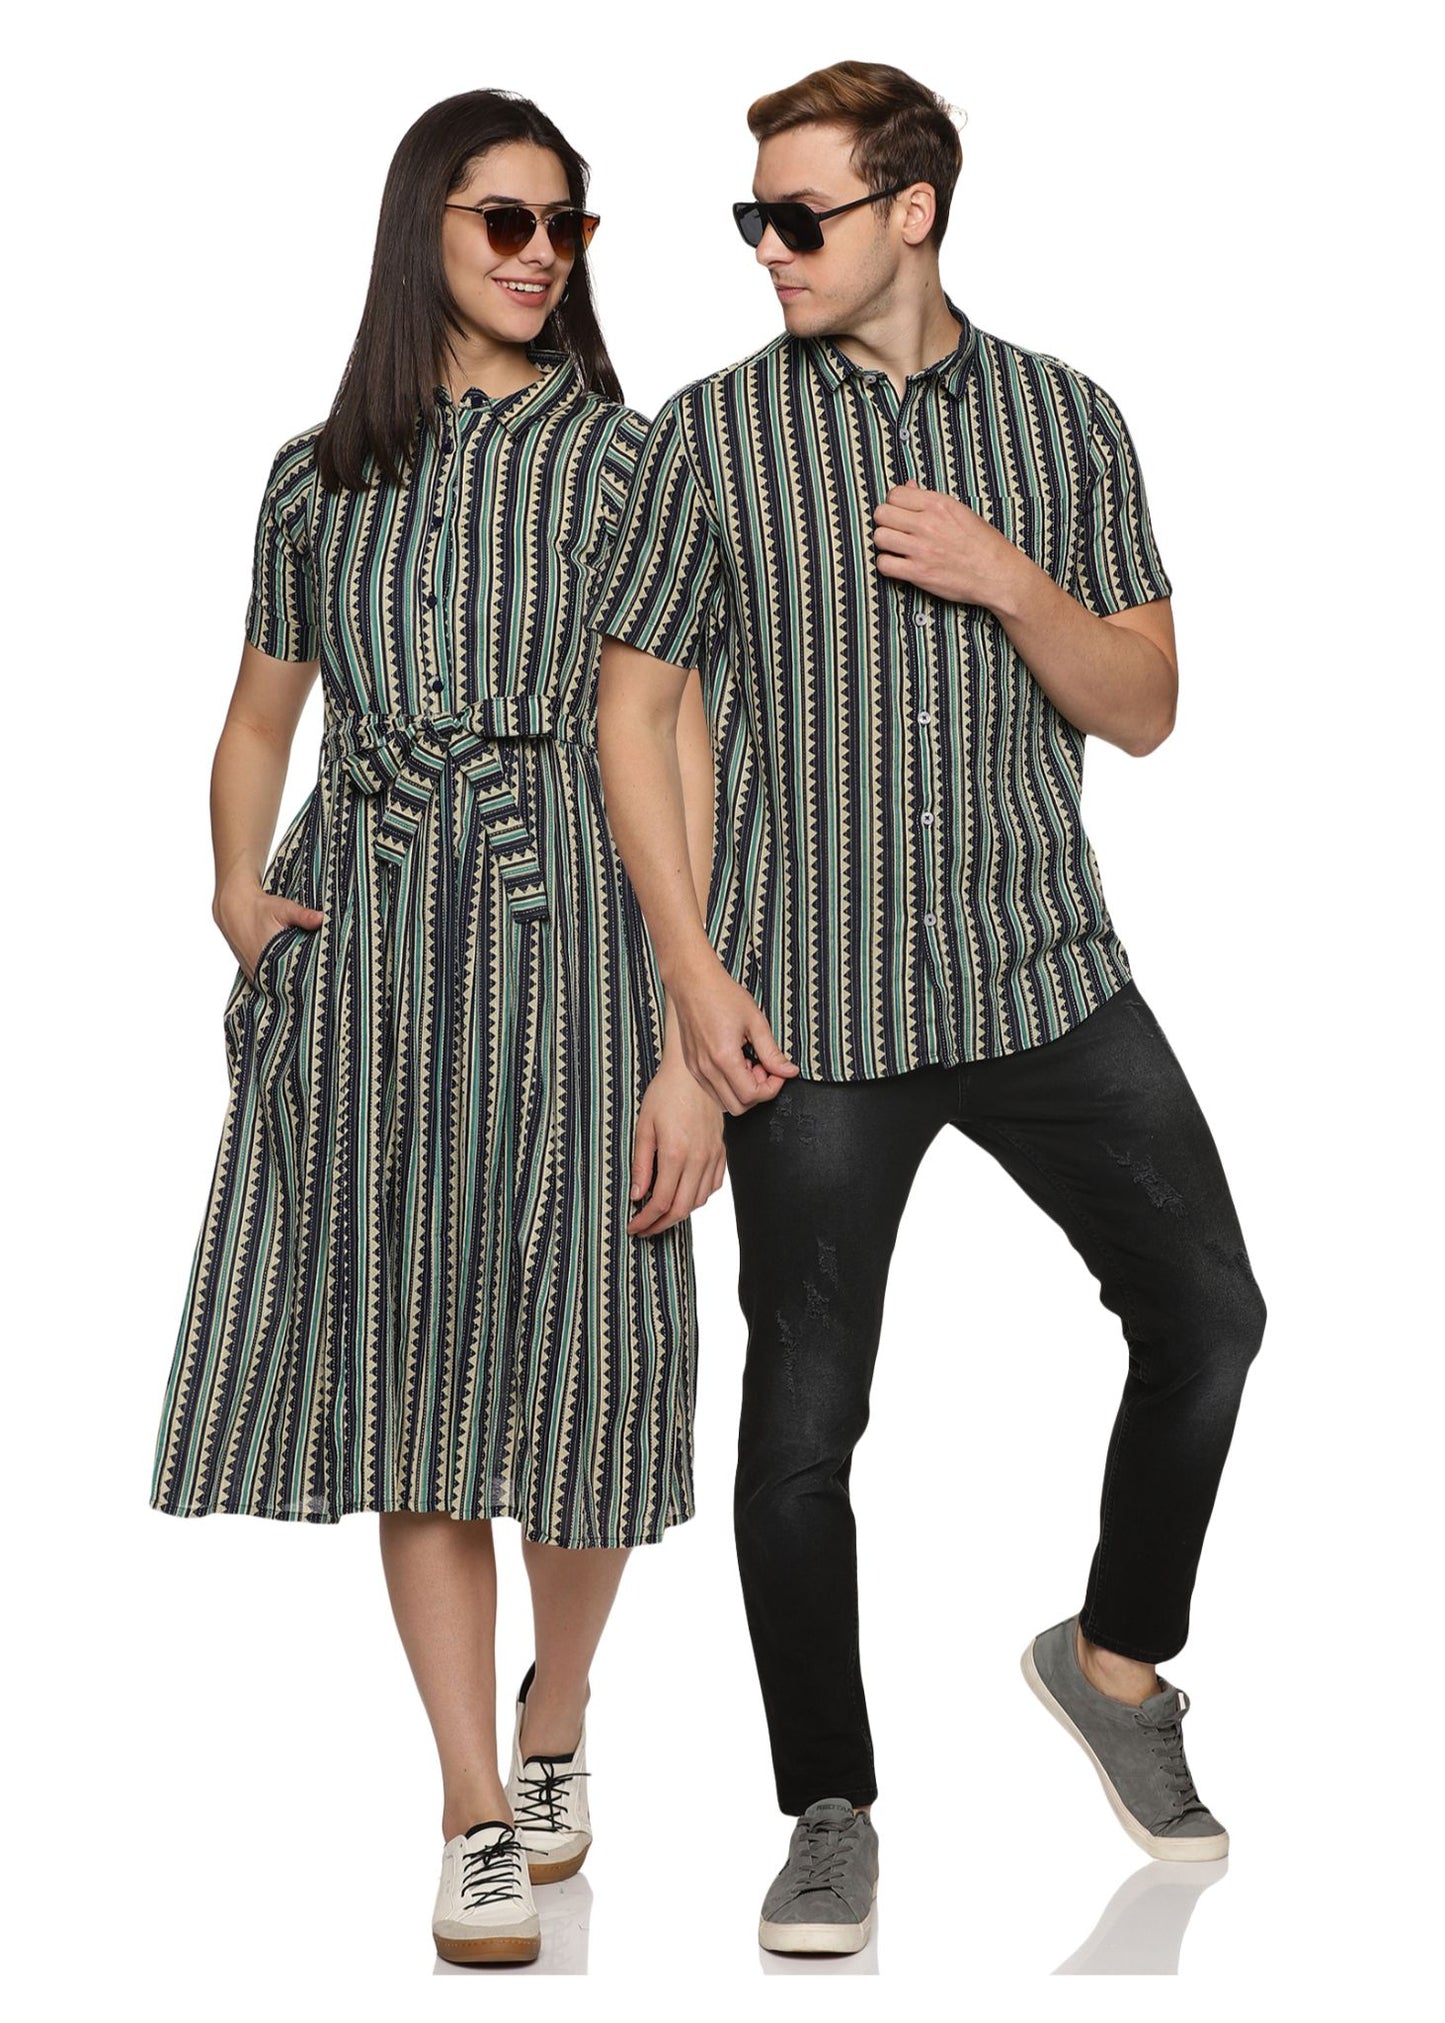 Hamilton Katha Couple Matching Shirt and Dress - Tusok